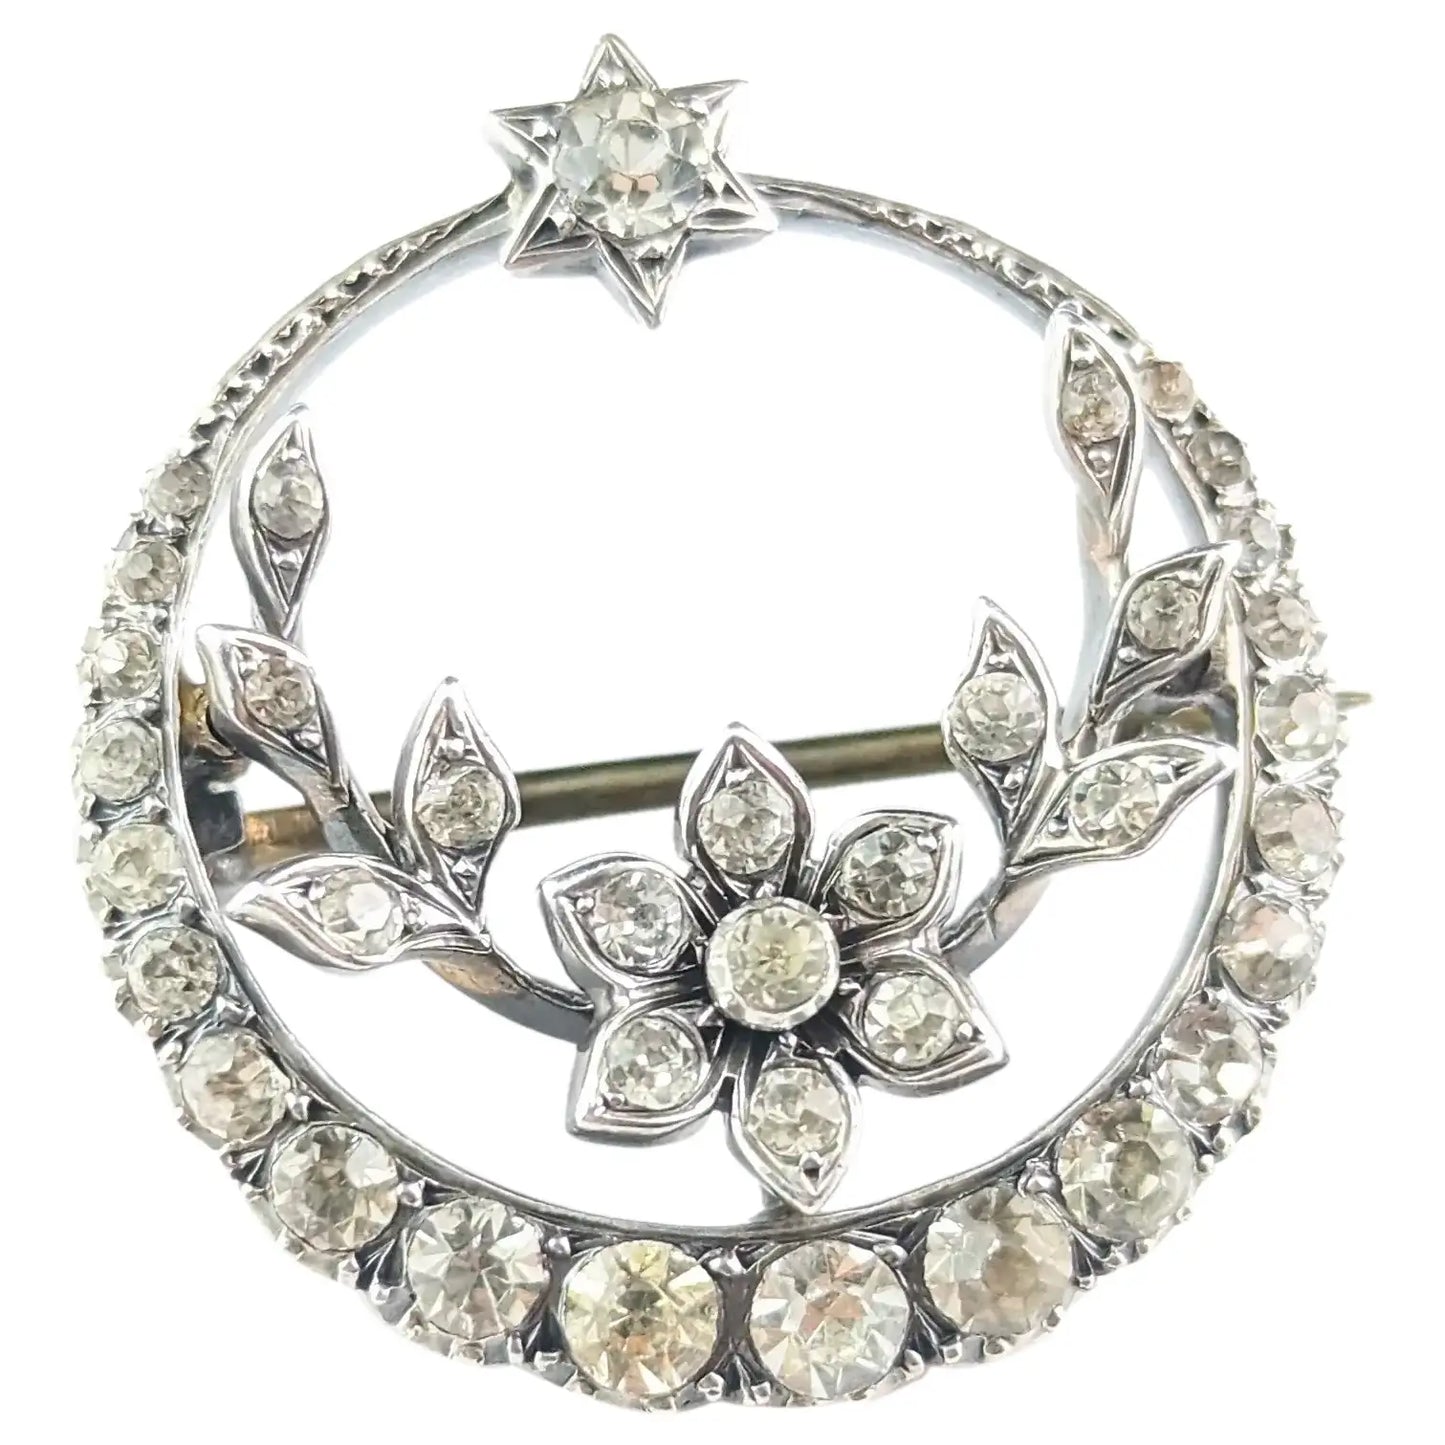 Antique Paste crescent brooch, Star, Floral, 900 silver